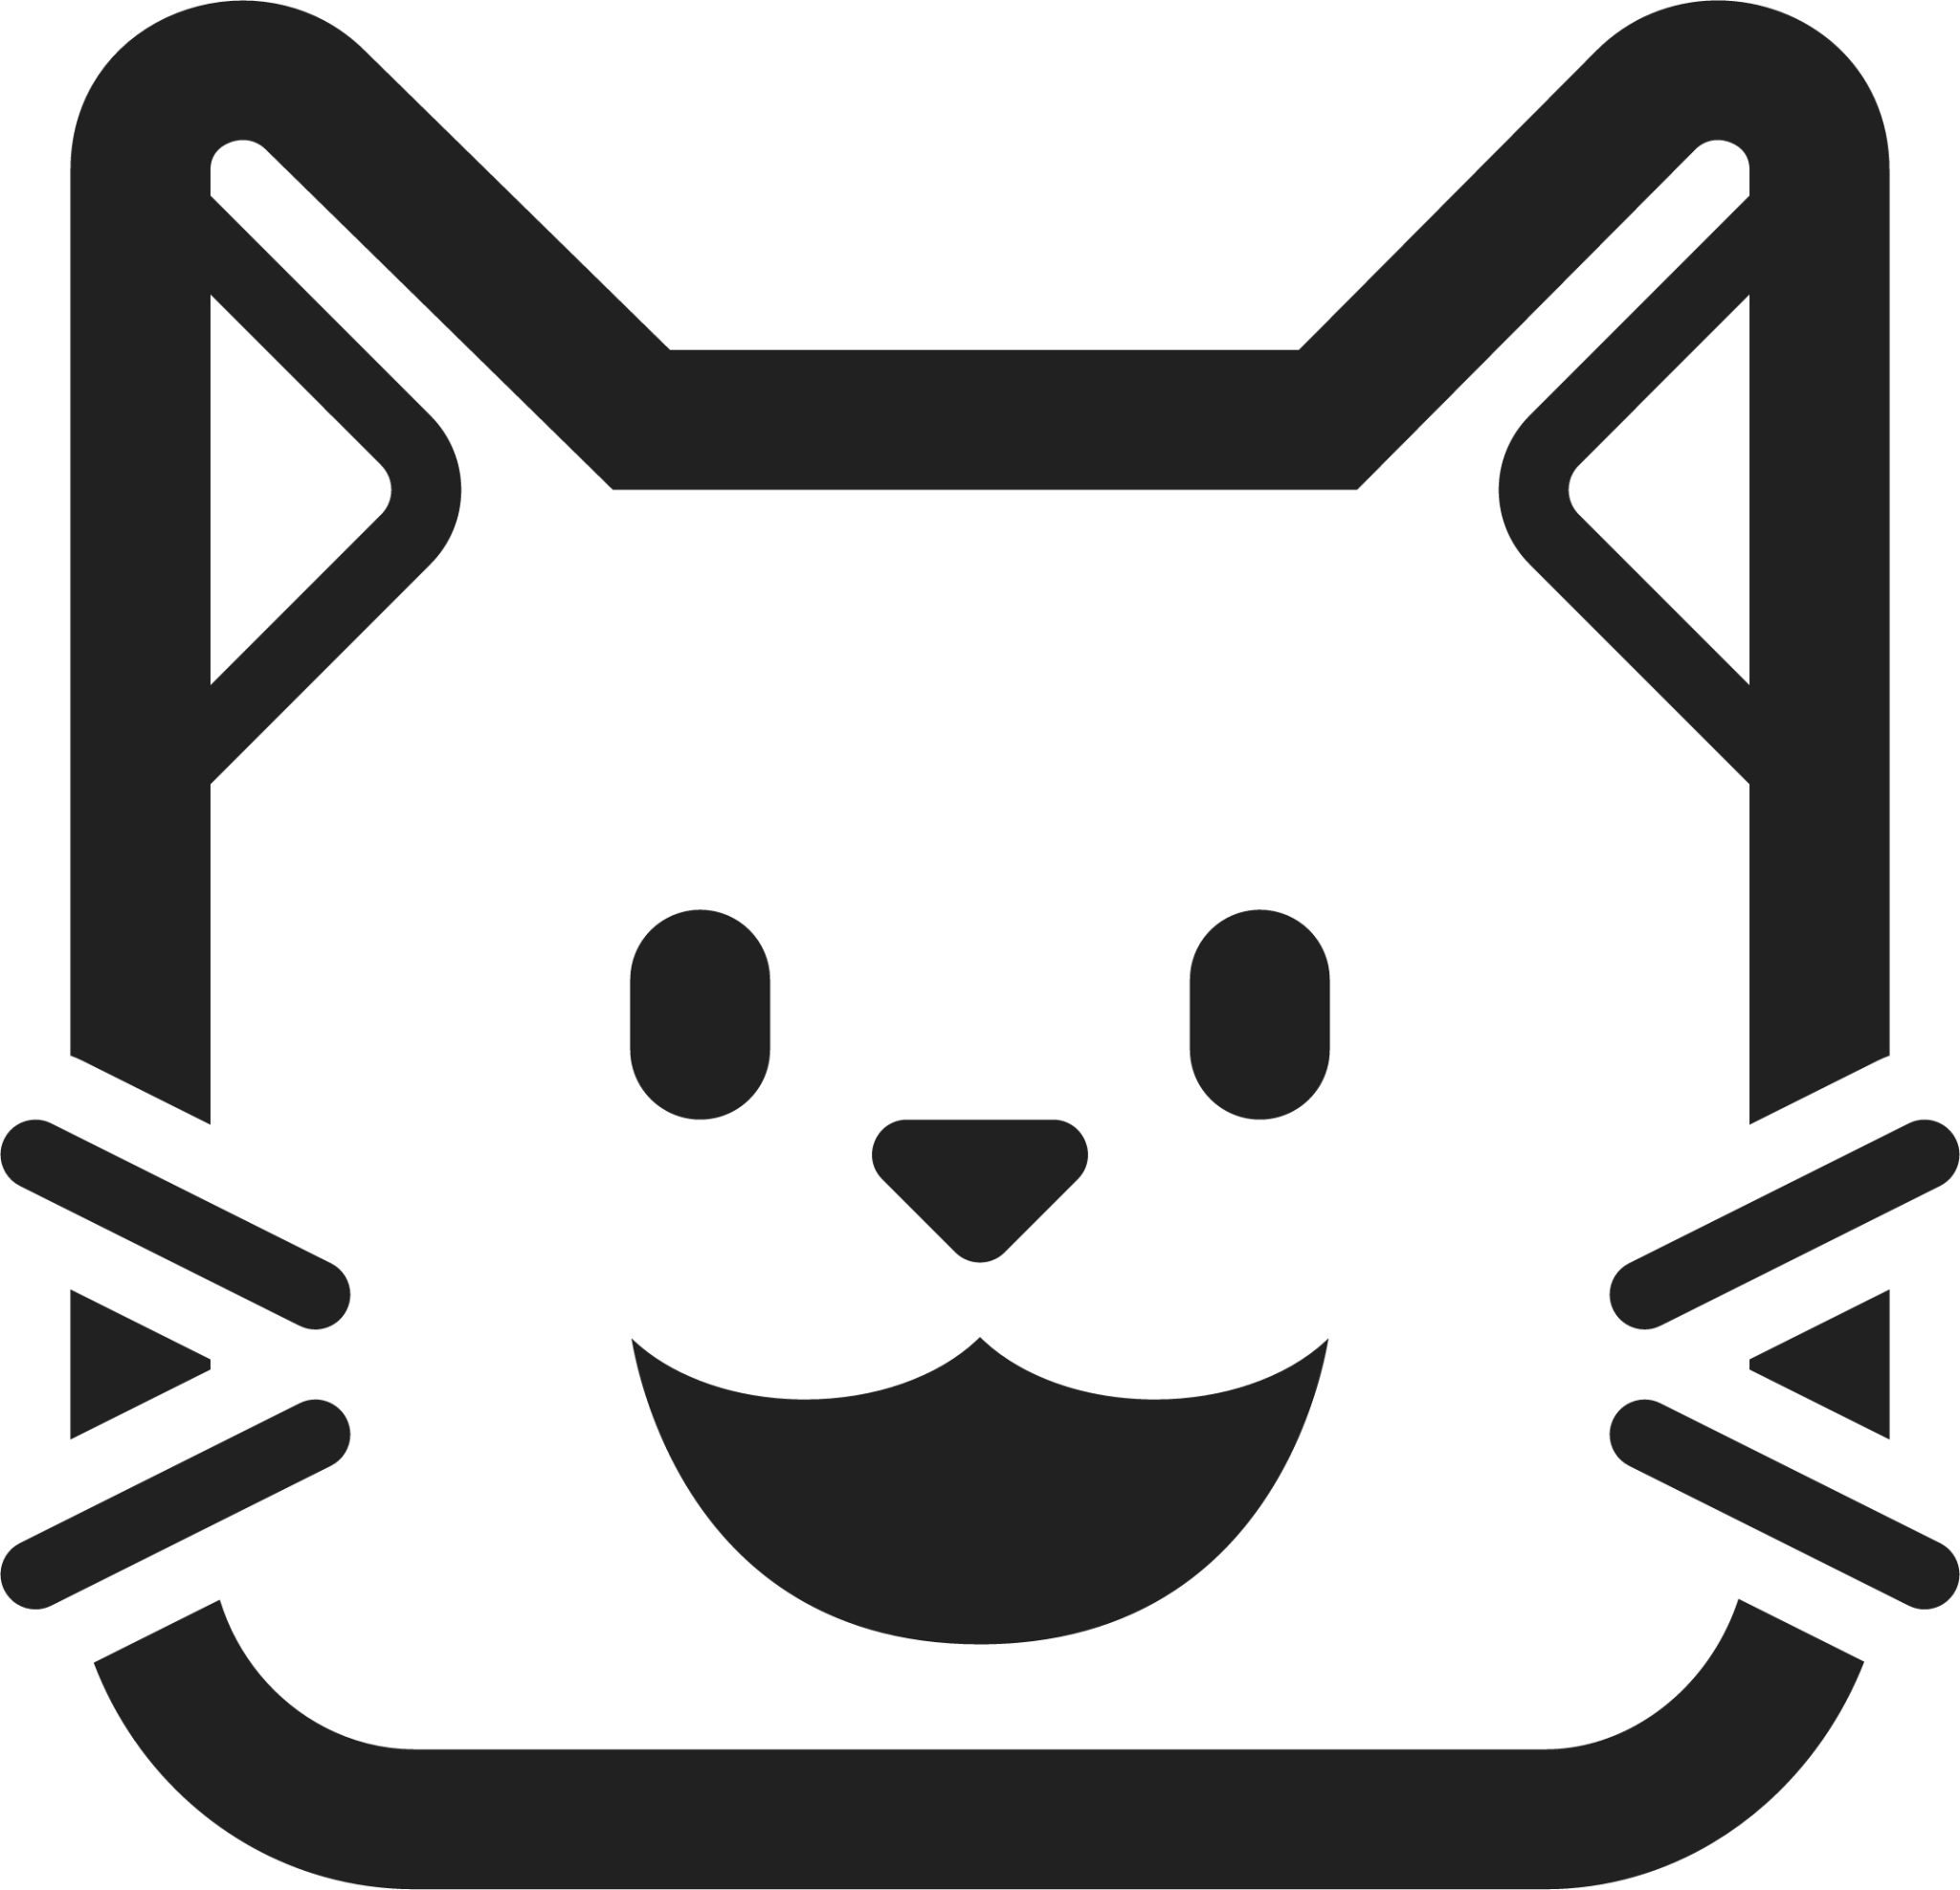 grinning cat emoji